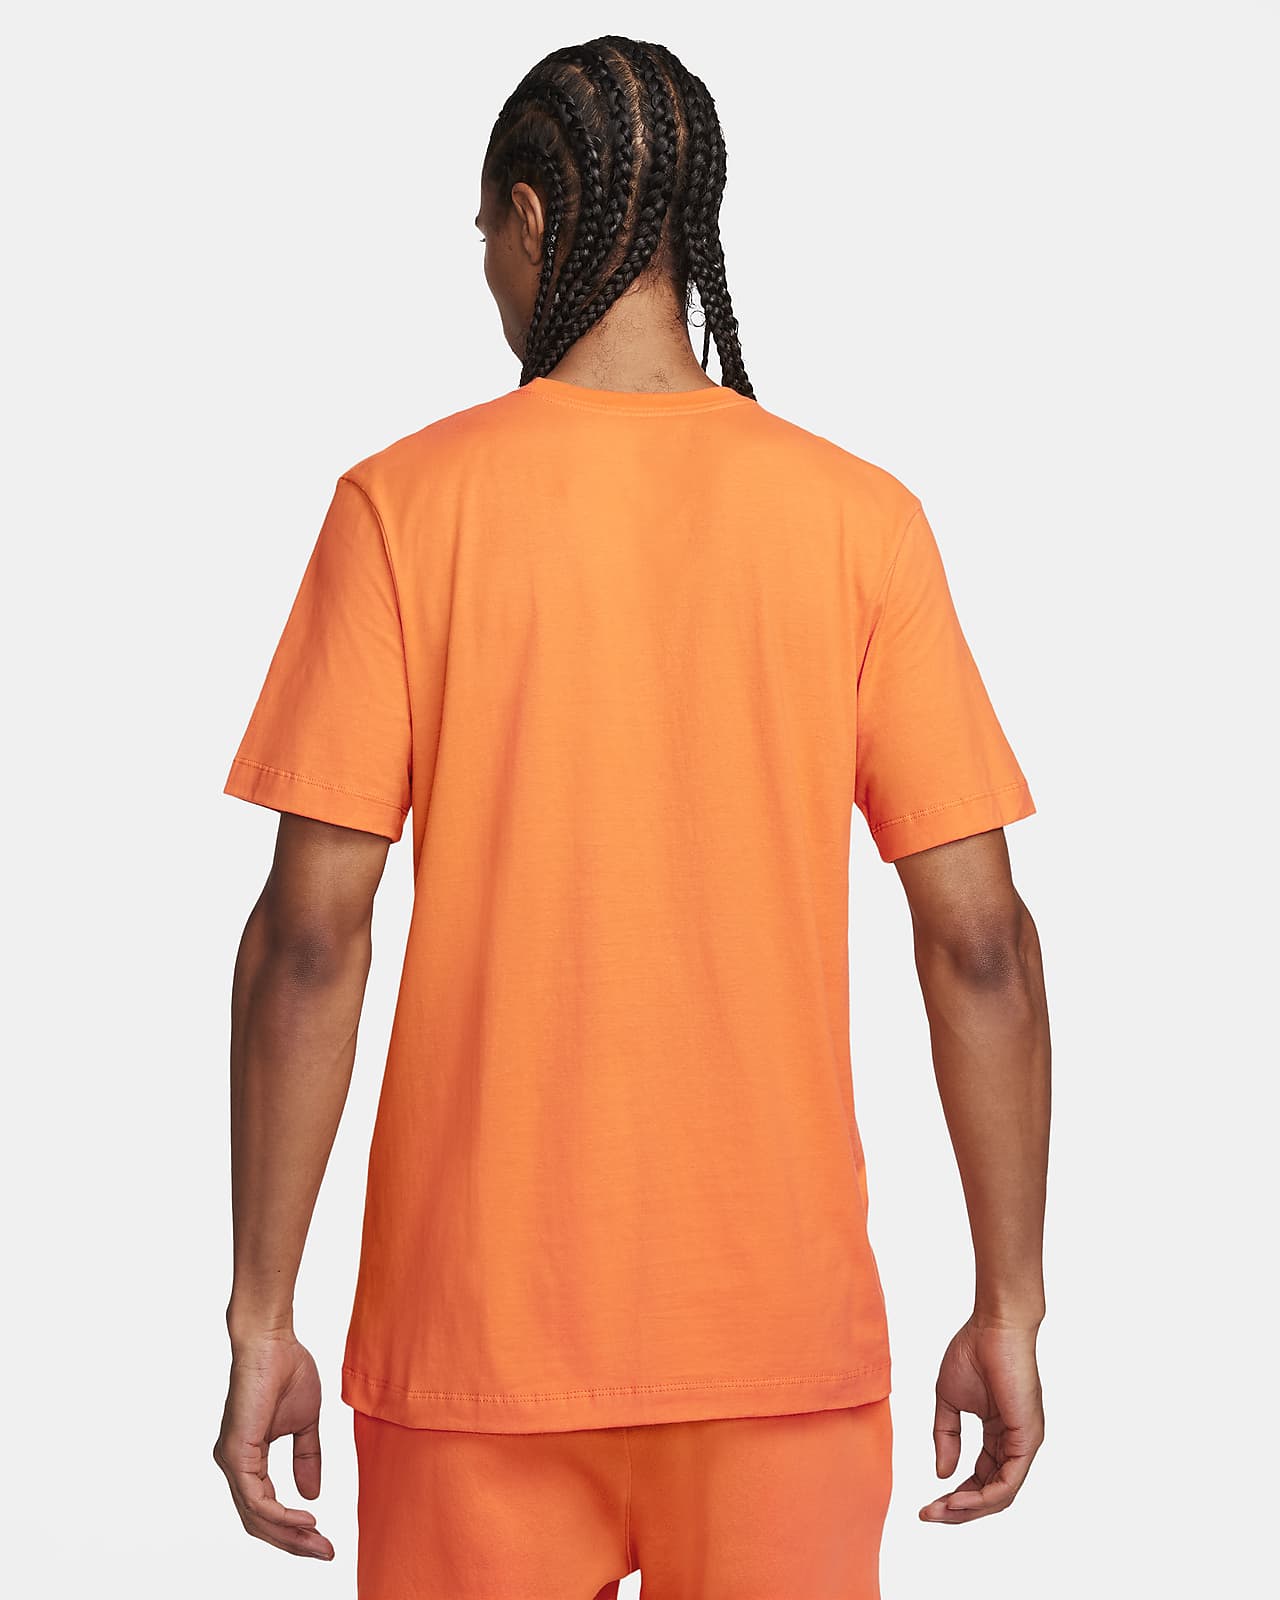 Nike Men's Basketball Graphic Long Sleeve Shirt Green Size 2XL